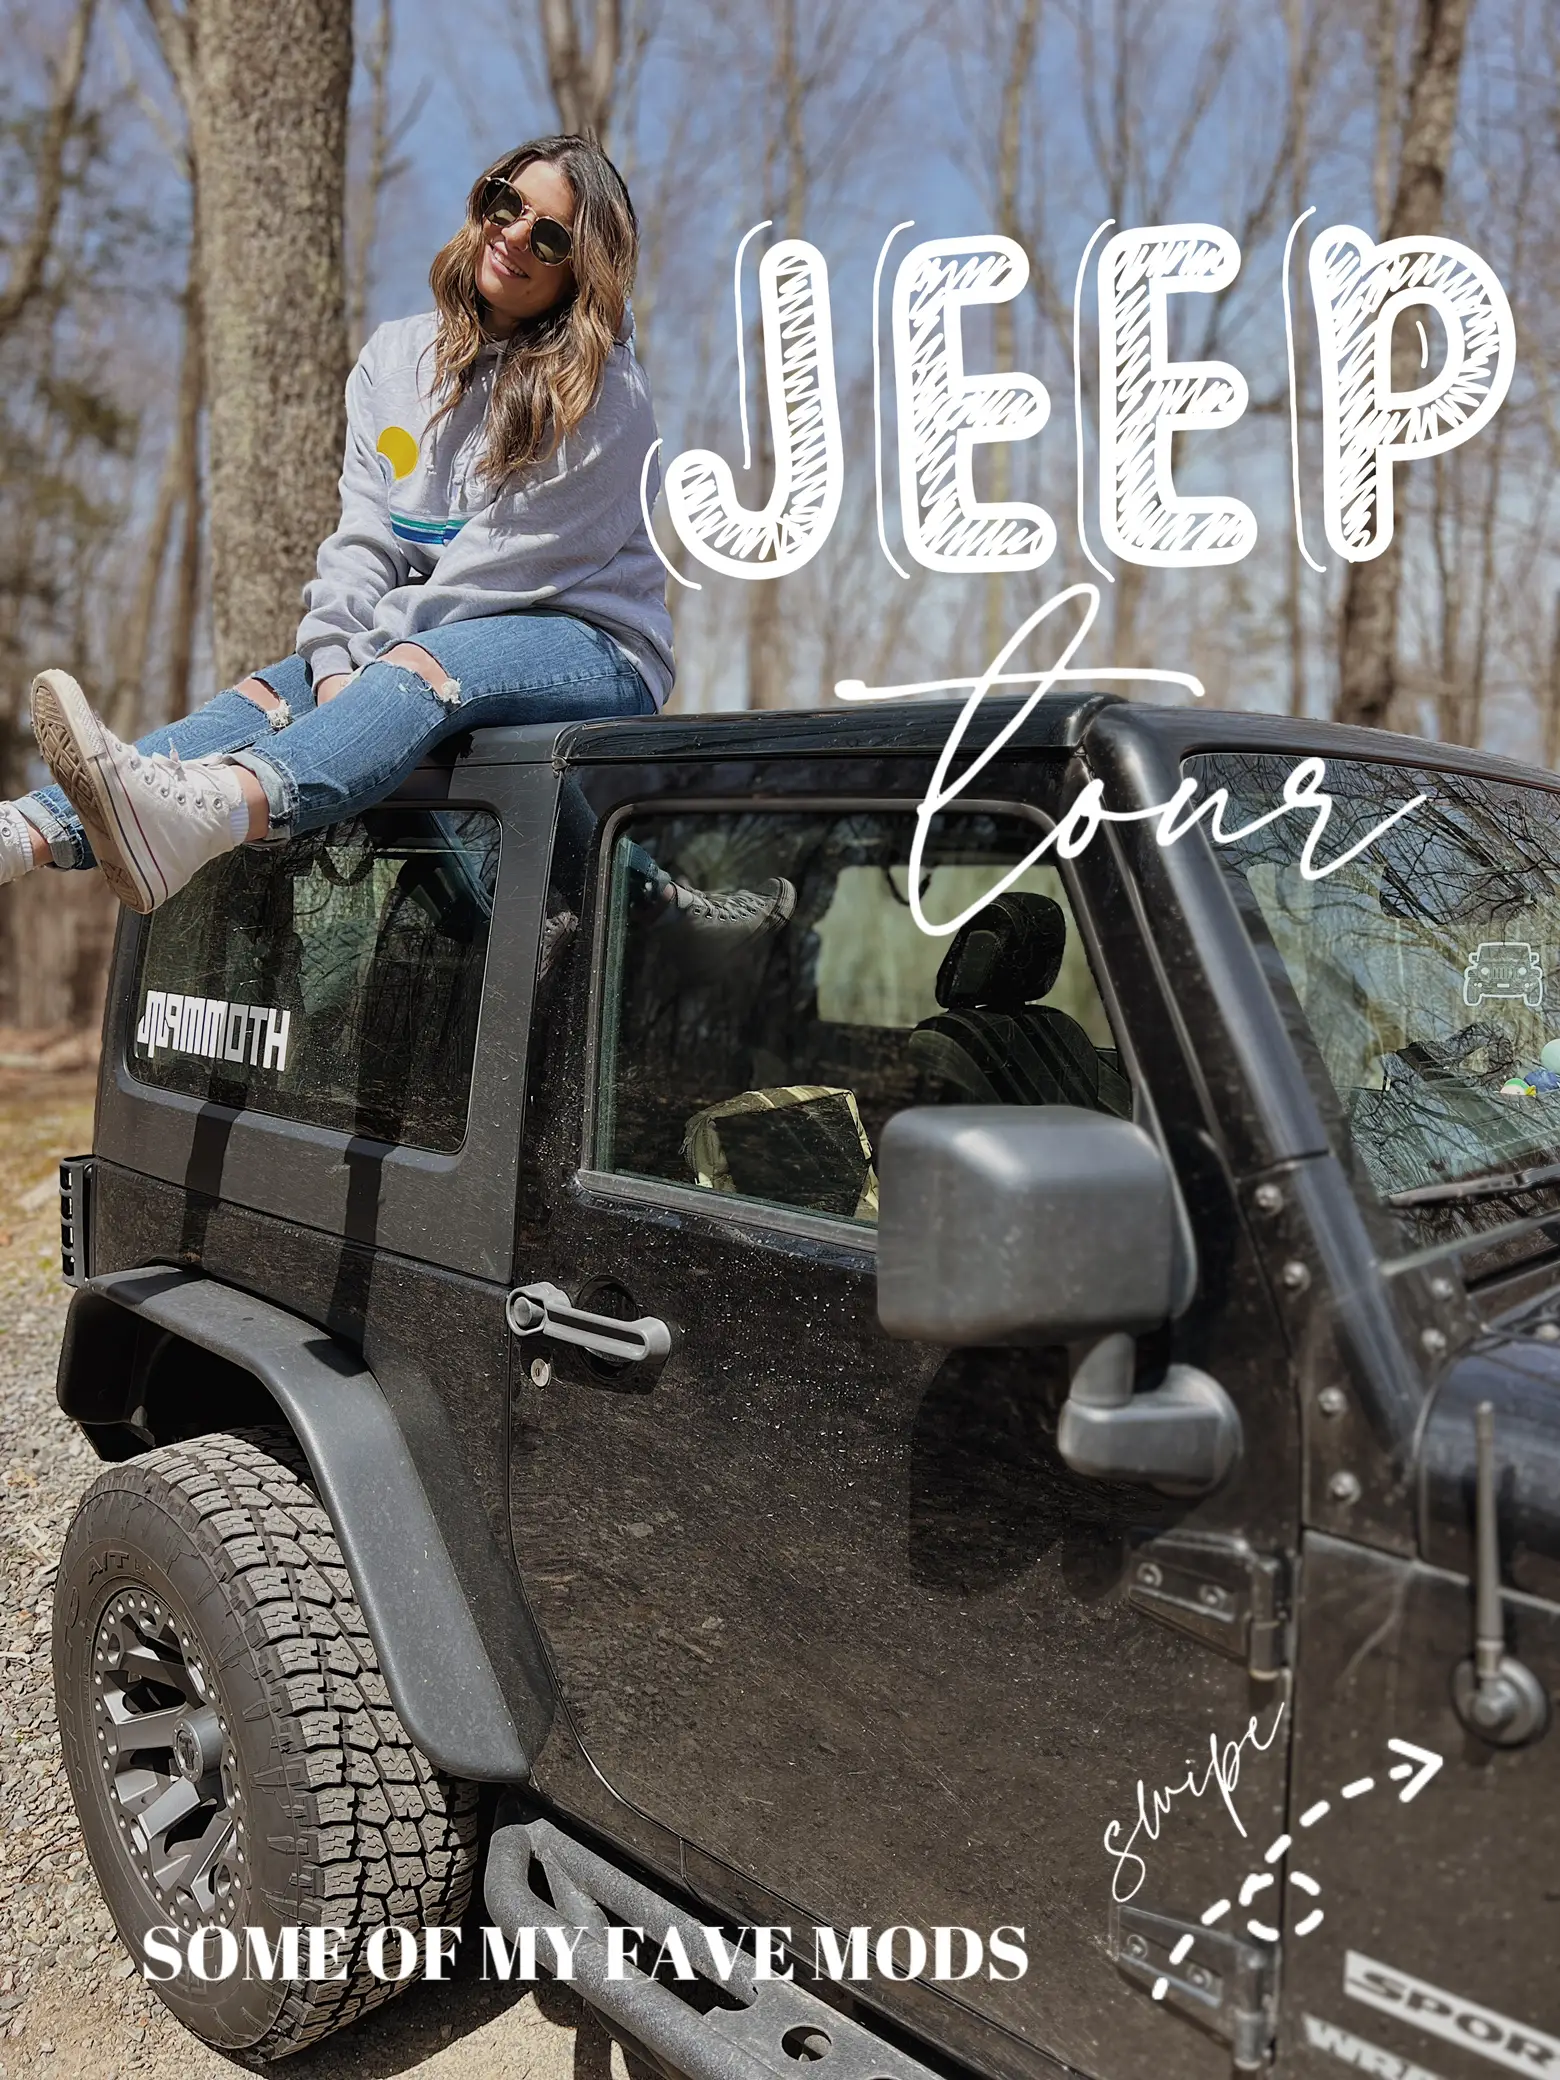 Jeep air freshener - Lemon8 Search